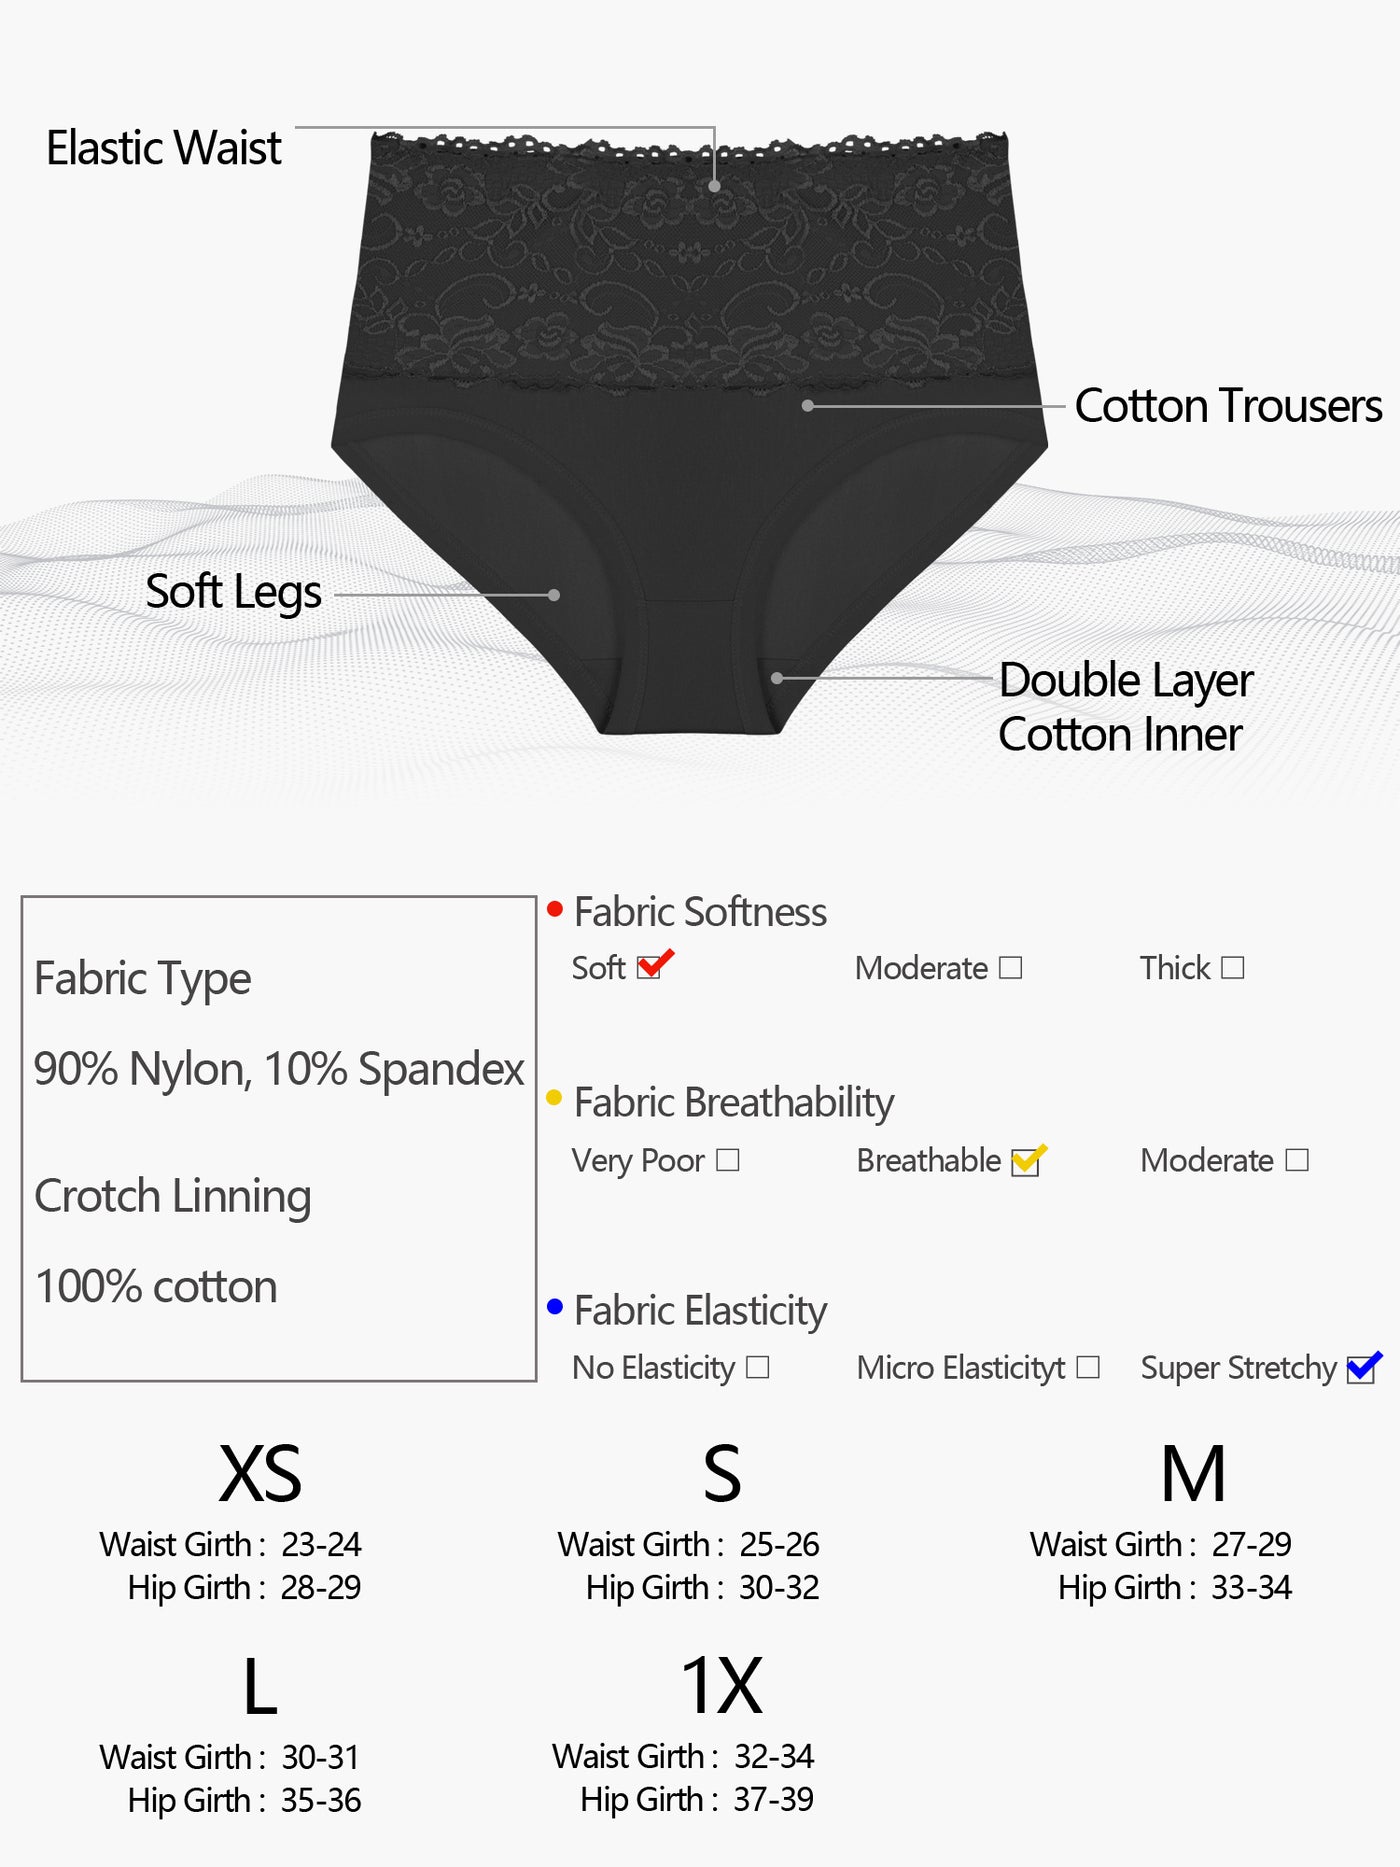 Bublédon Underpants for Women Stretch Briefs Breathable Panties 3 Packs